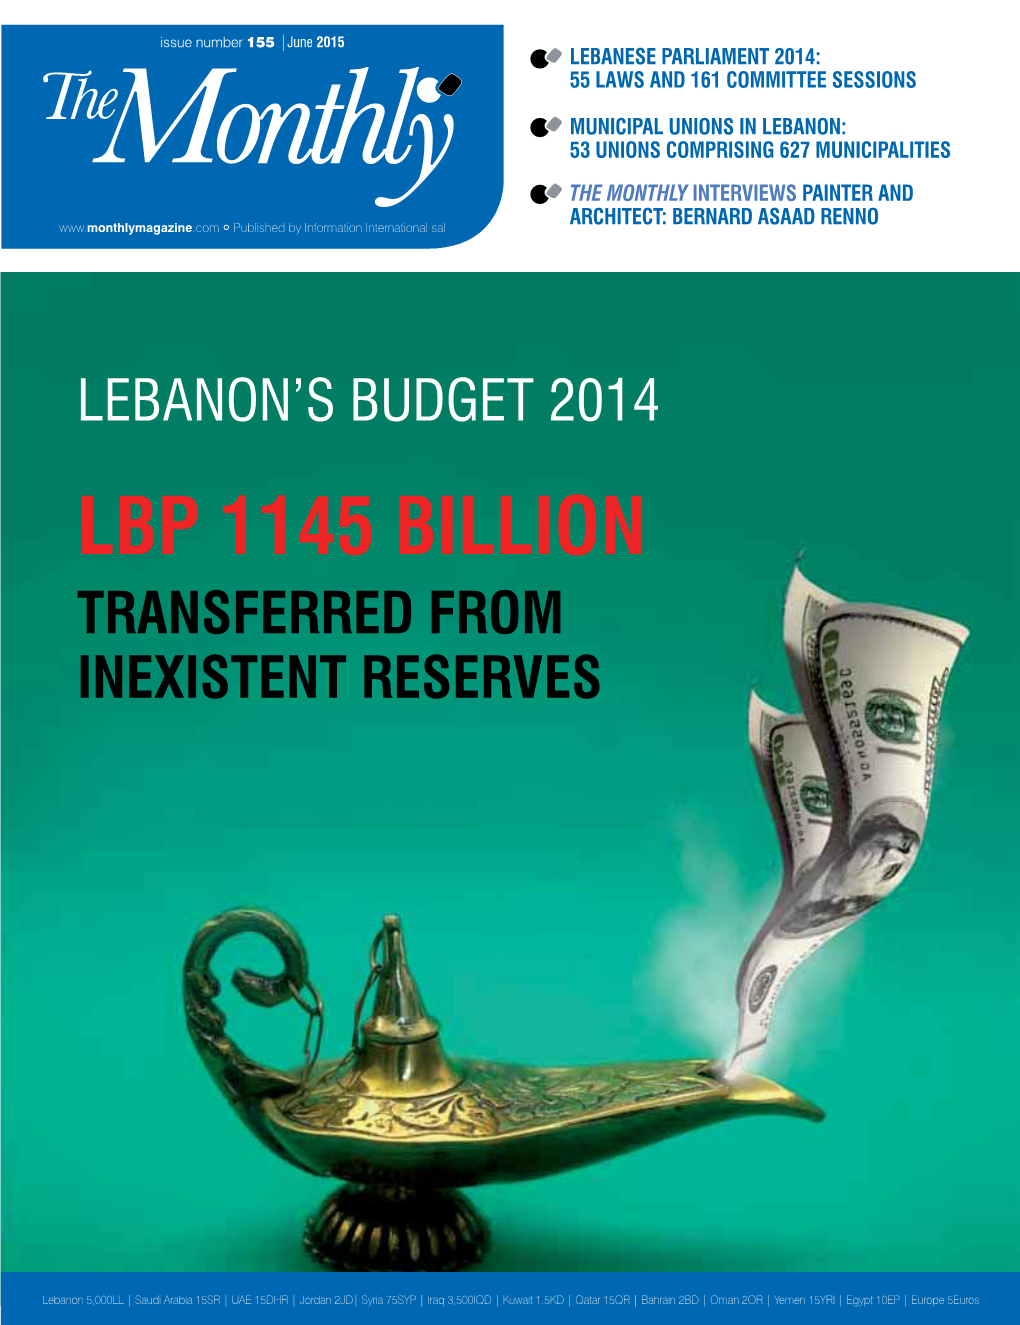 Lbp 1145 Billion Transferred from Inexistent Reserves